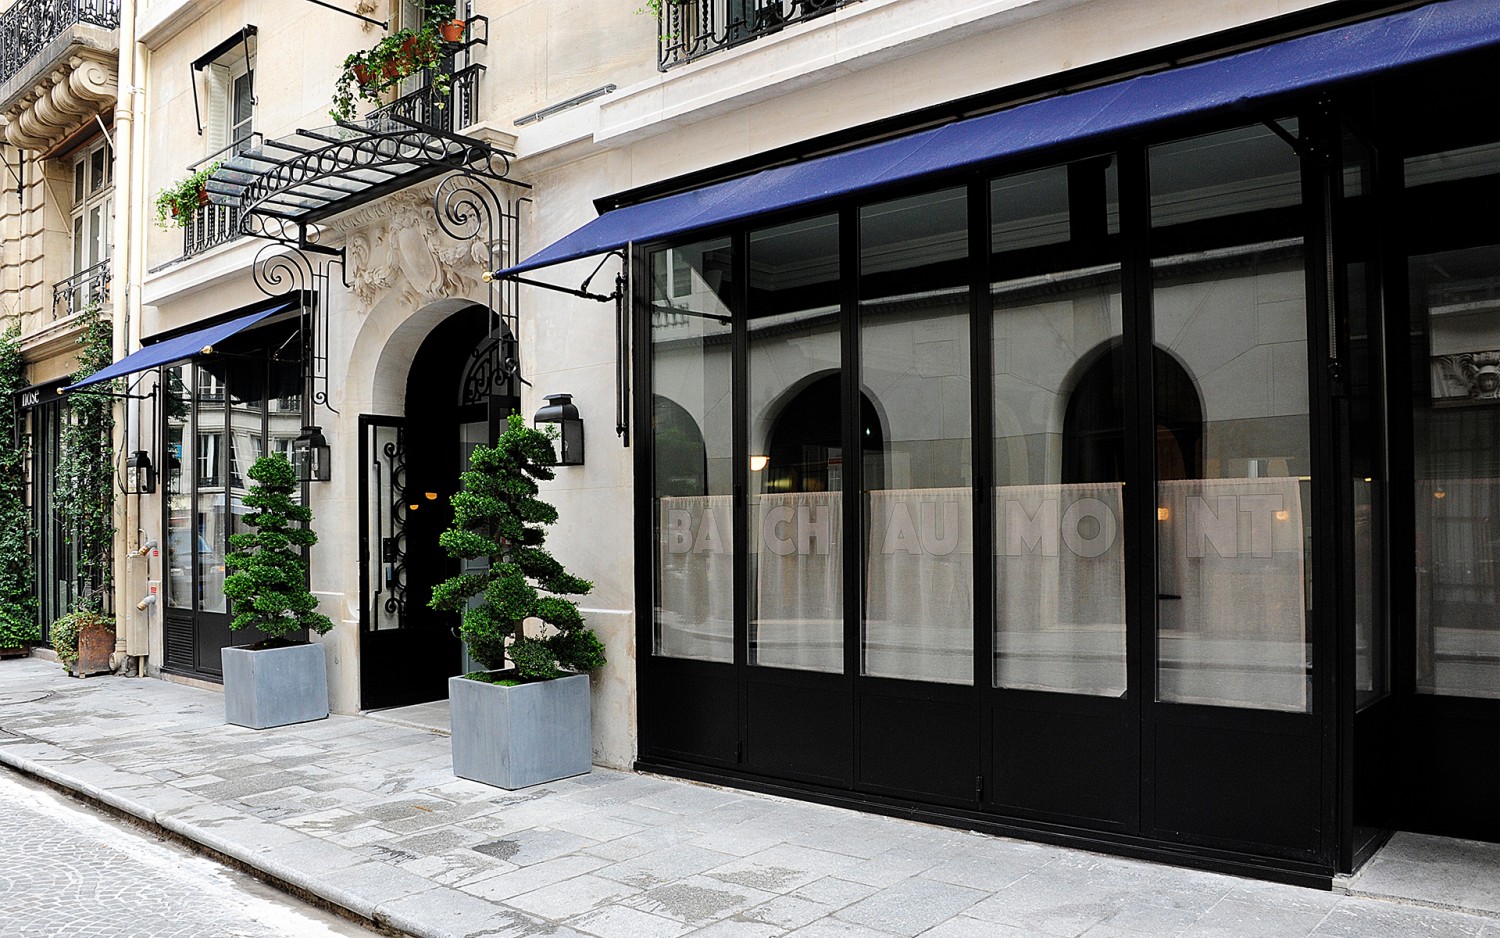 Hotel Bauchamont Paris - Paris'te kalınacak en iyi yerlerden biri